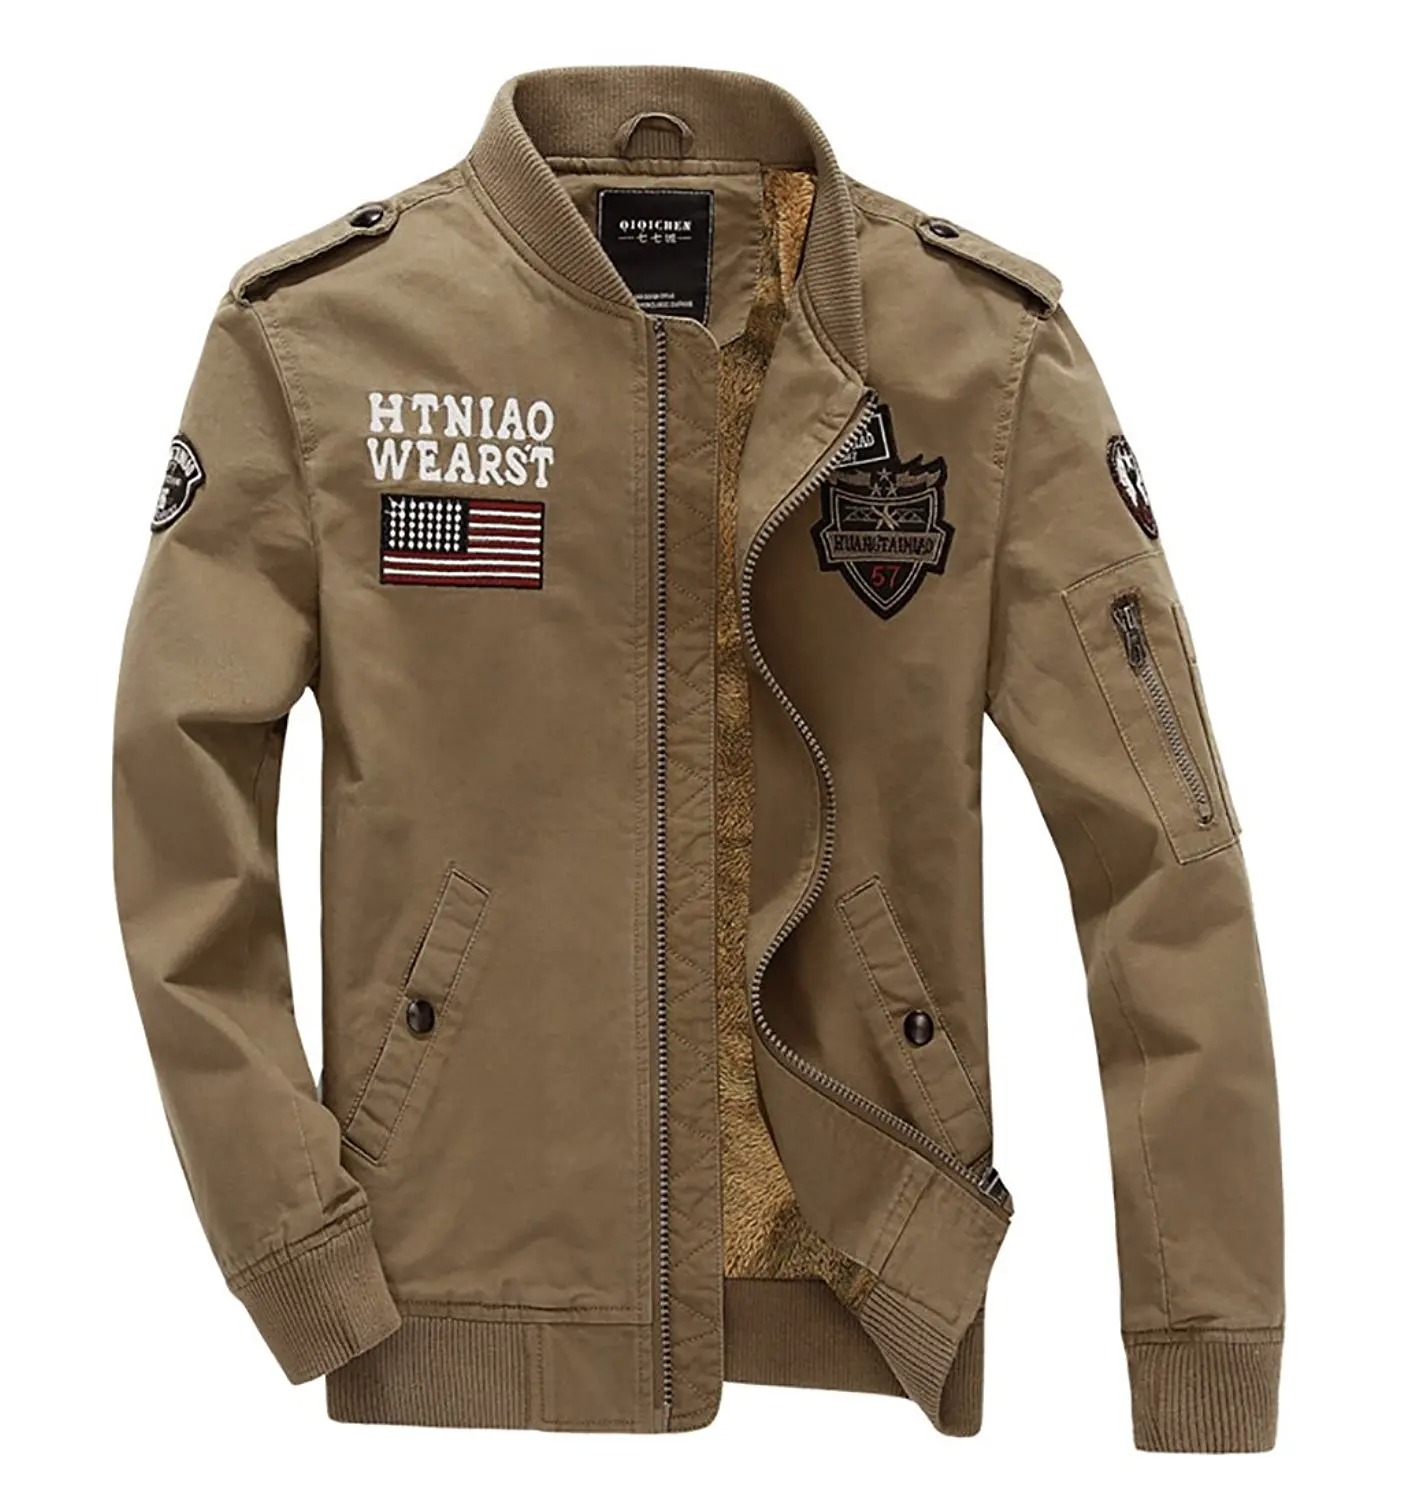 Cheap Air Force Uniform Jacket, find Air Force Uniform Jacket deals on ...